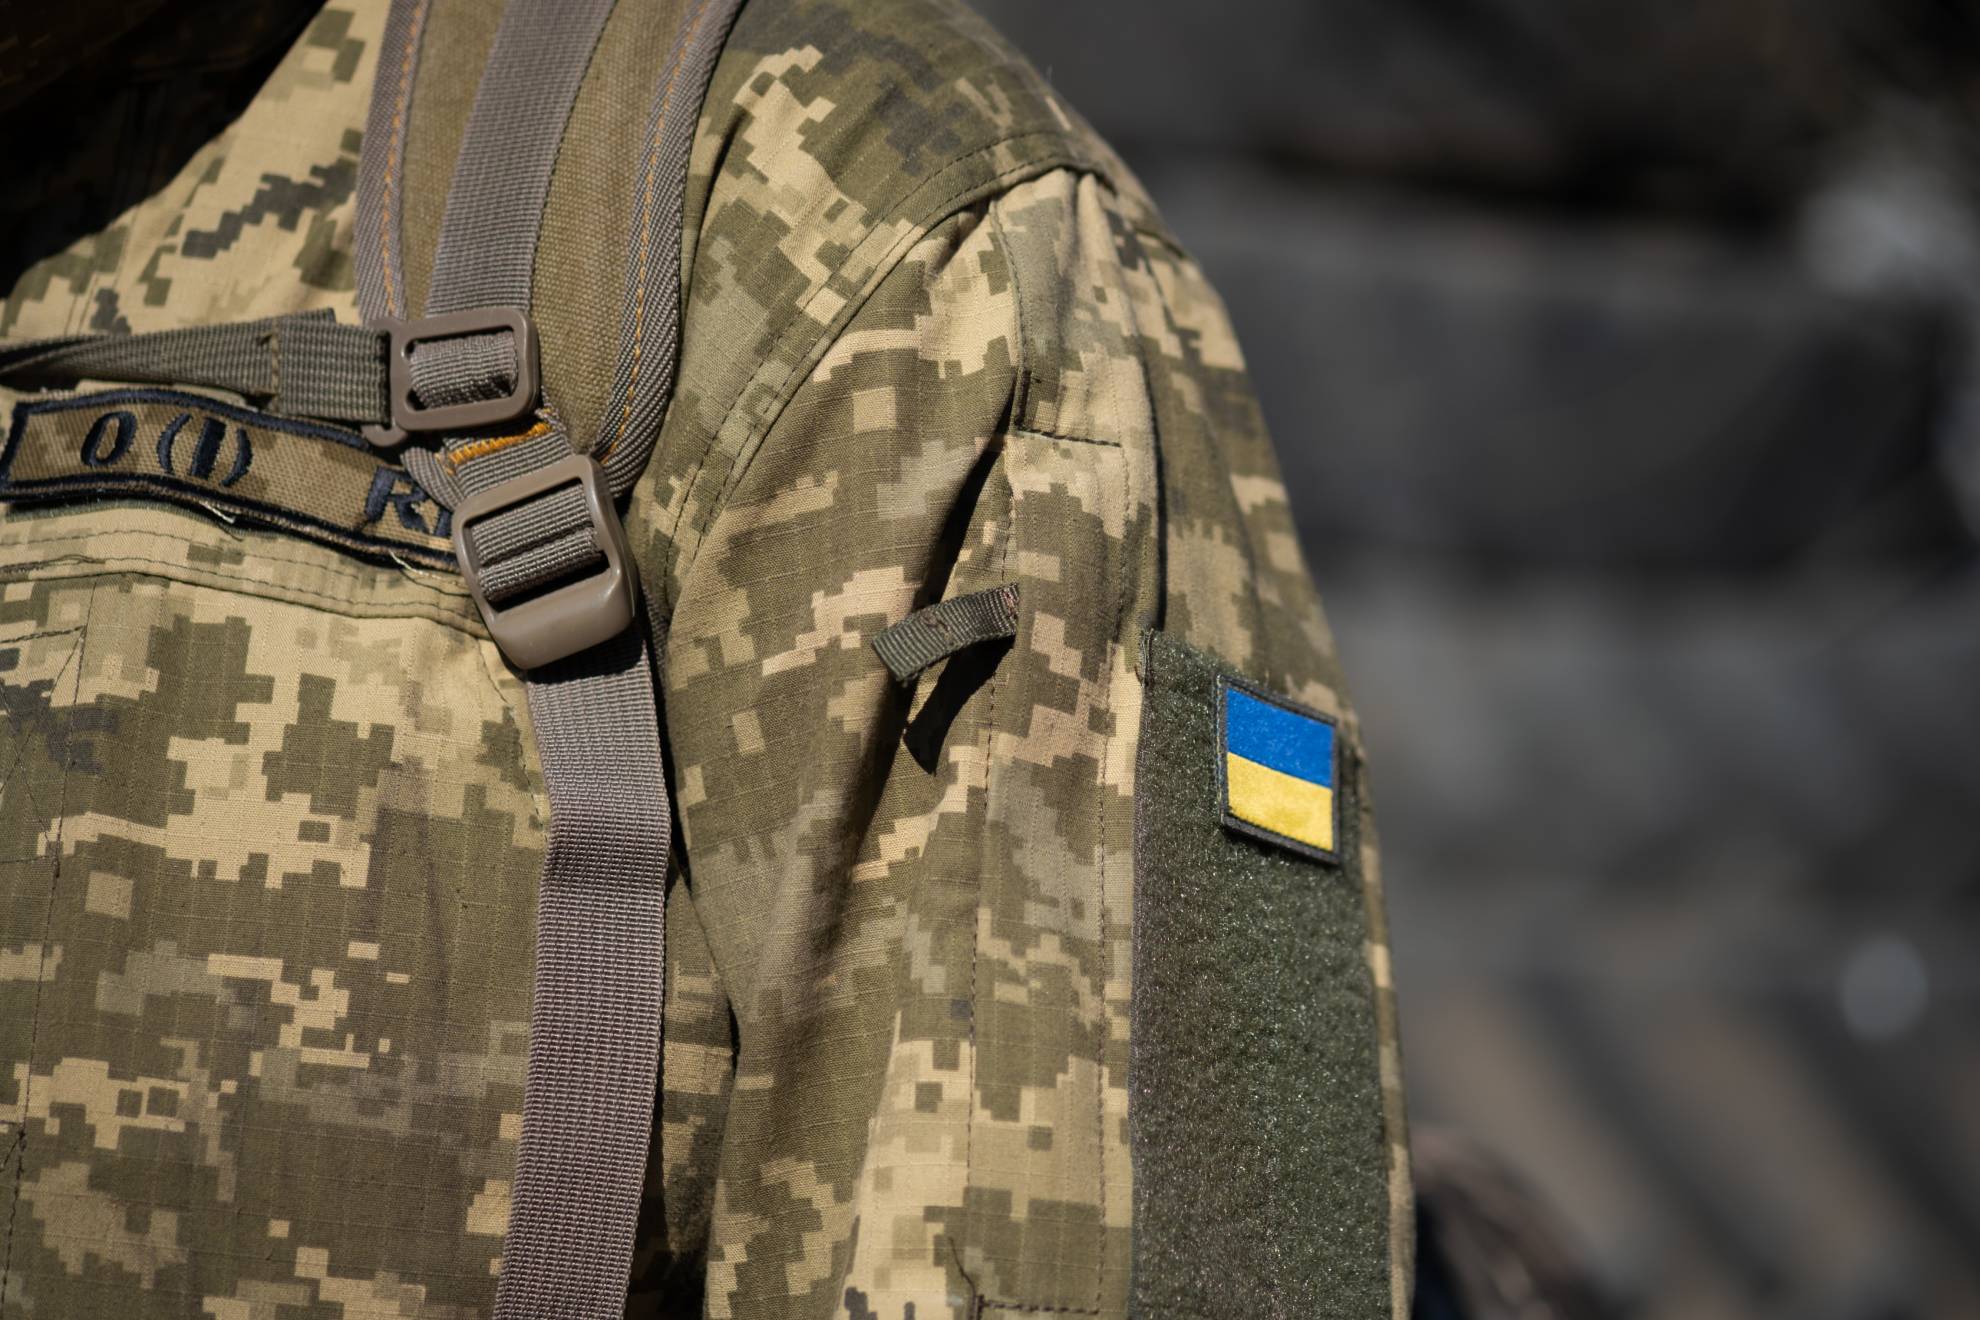 ukrainian-flag-on-a-military-uniform-war-soldier-2022-03-29-23-37-15-utc (1)